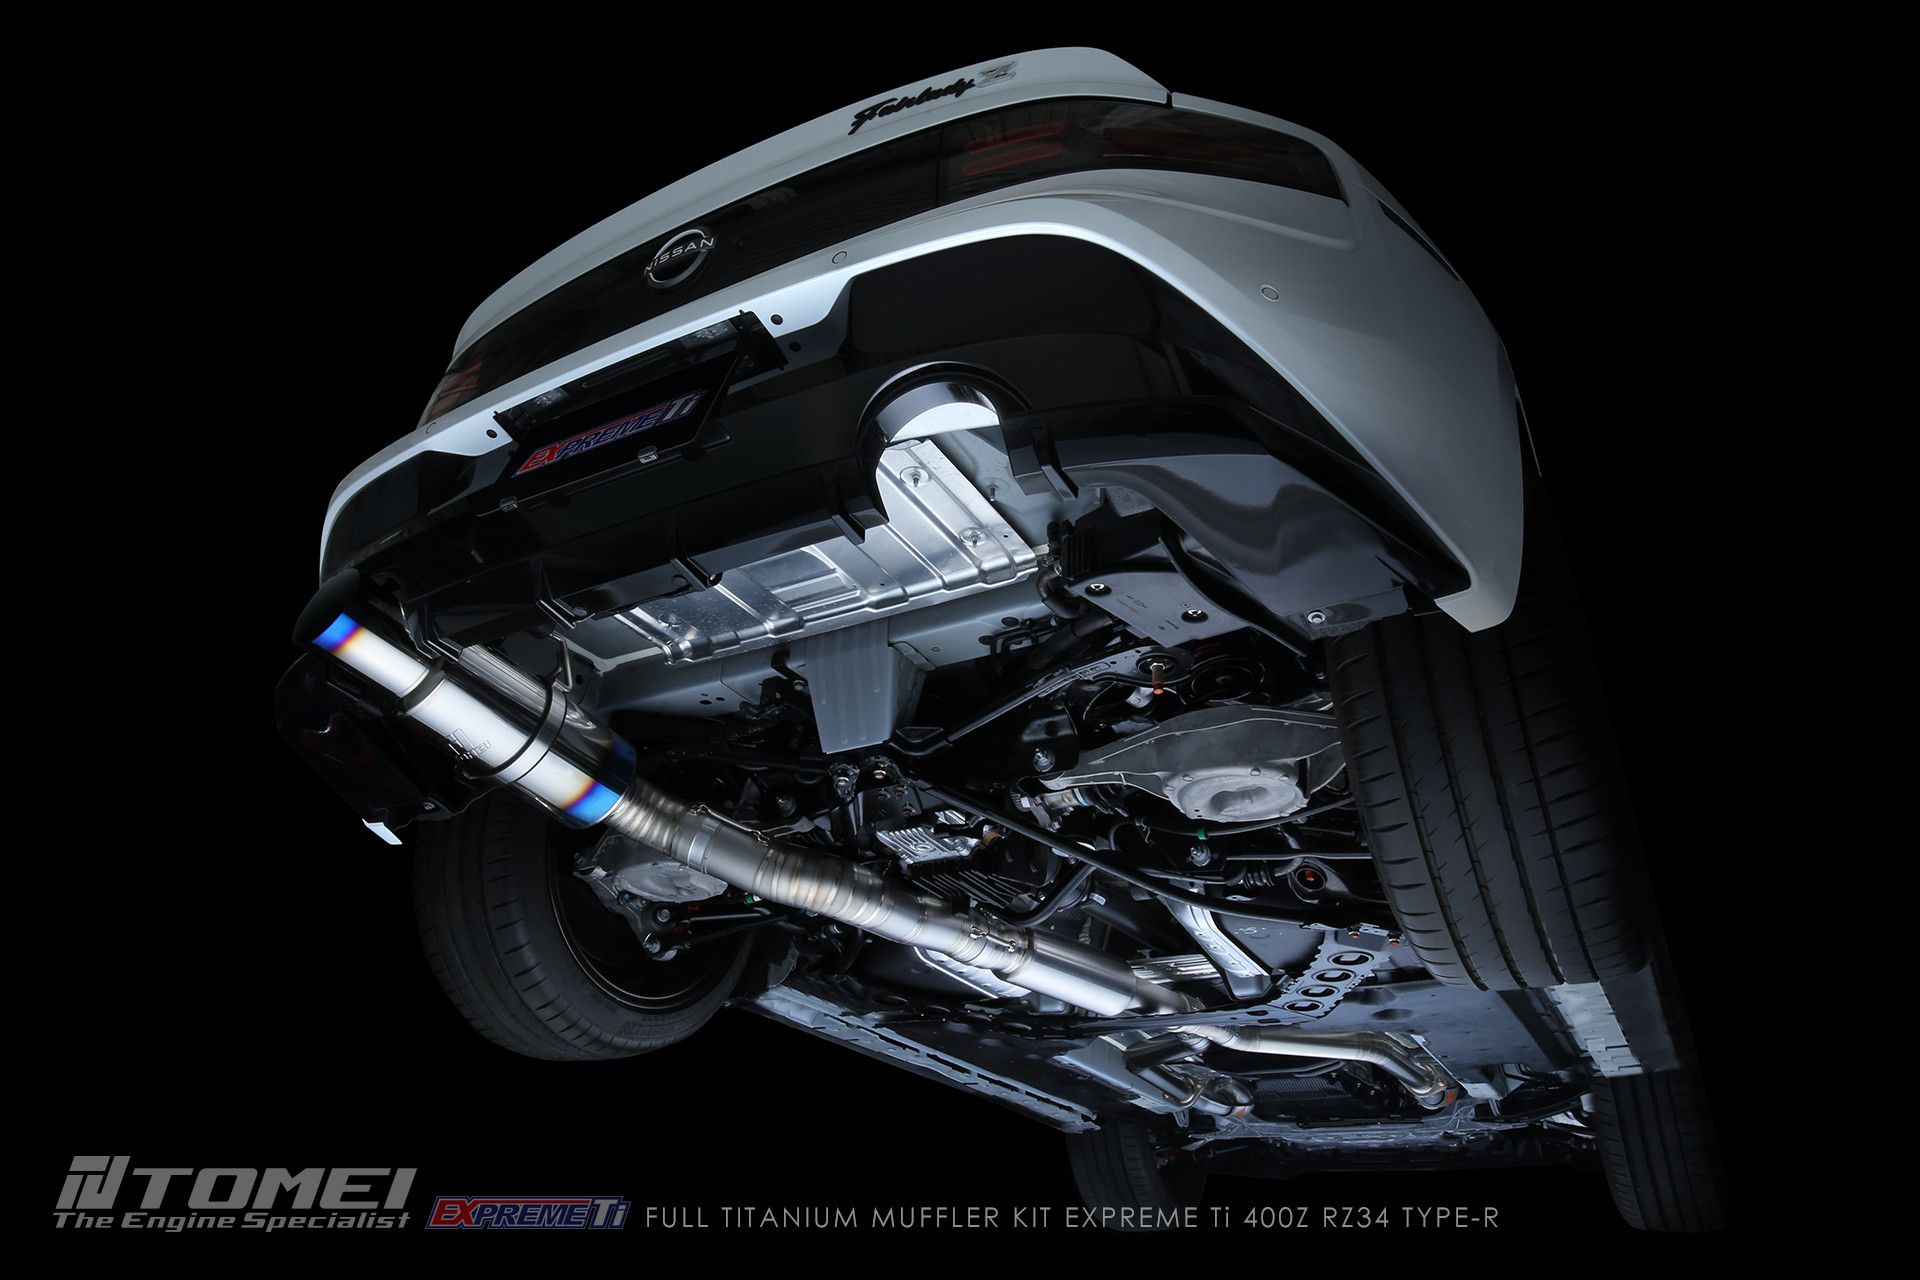 Tomei Full Titanium Muffler Kit Expreme Ti, Type-R - Nissan Z 2023+ RZ34  TB6090-NS21C 400z exhaust - Concept Z Performance